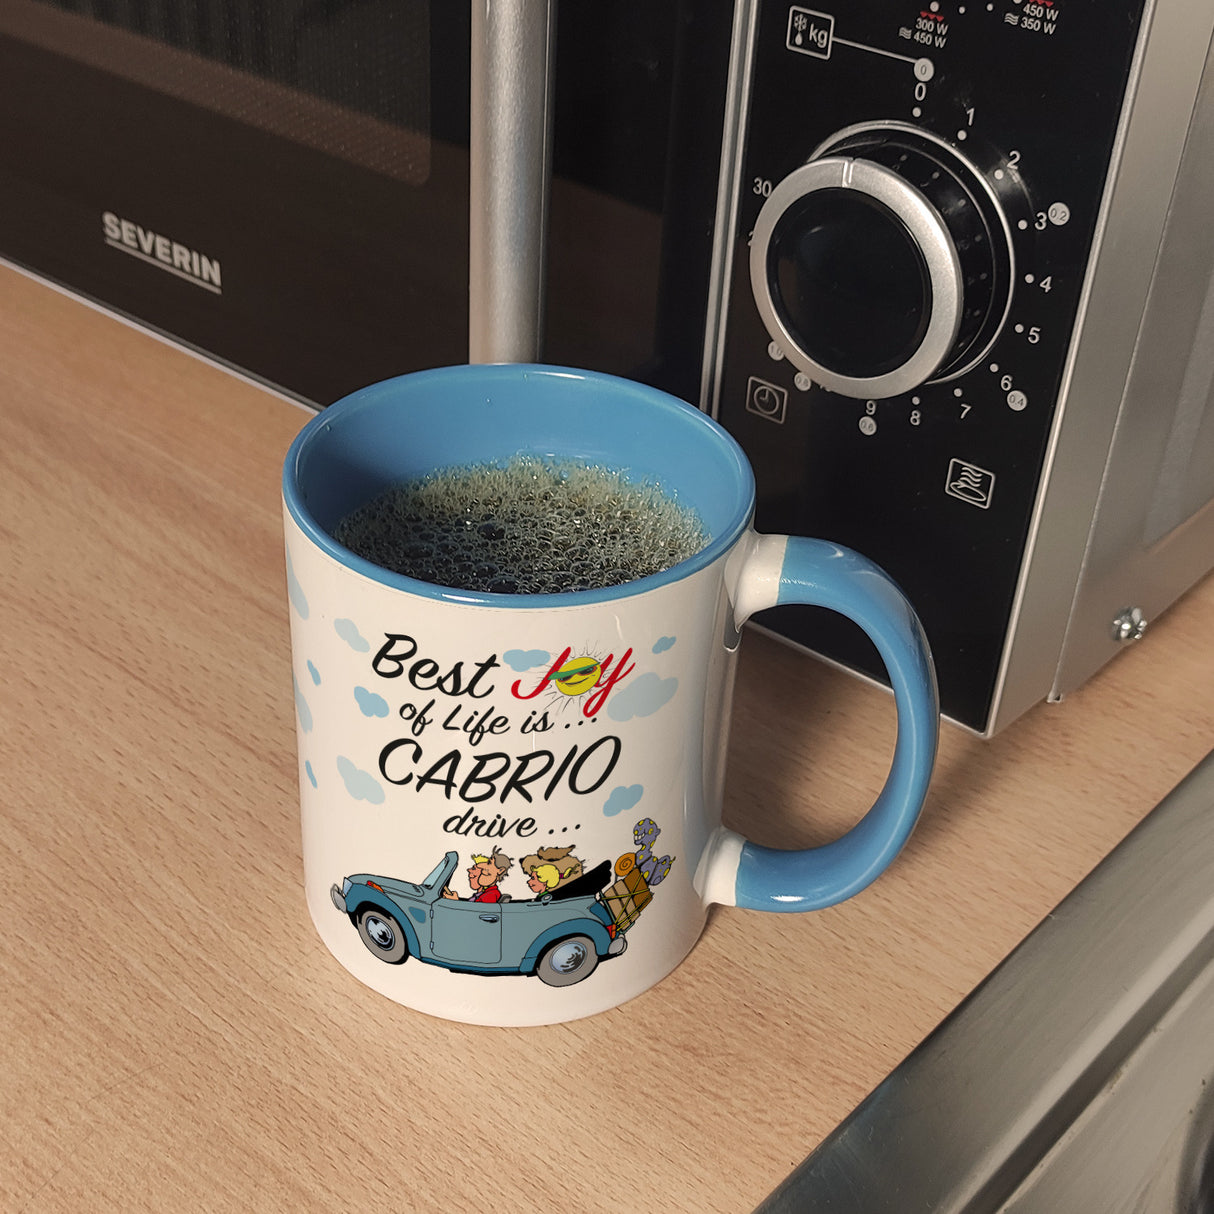 Best Joy of Life is Cabrio Drive Kaffeebecher